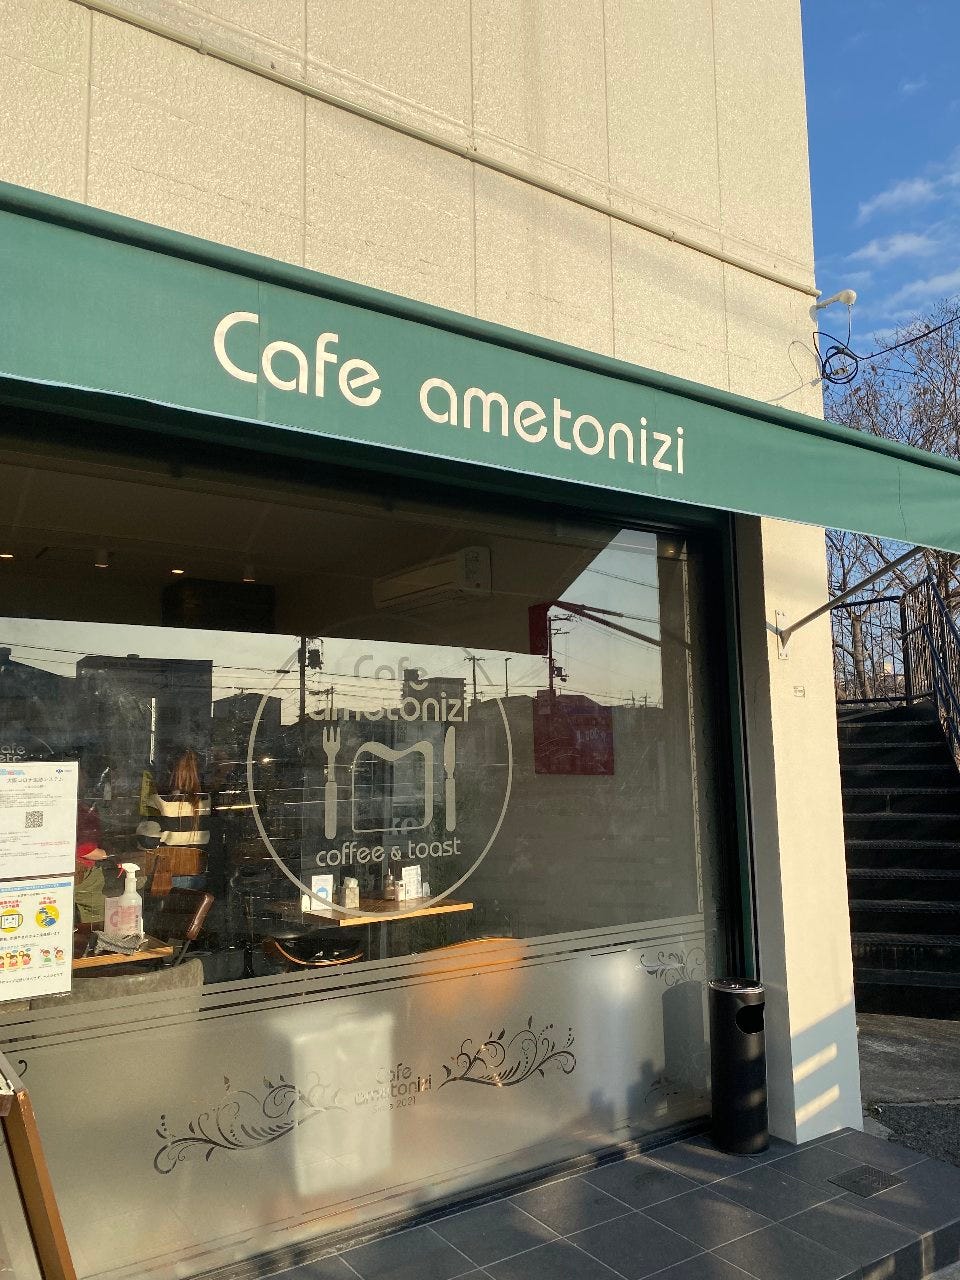 Cafe ametonizi